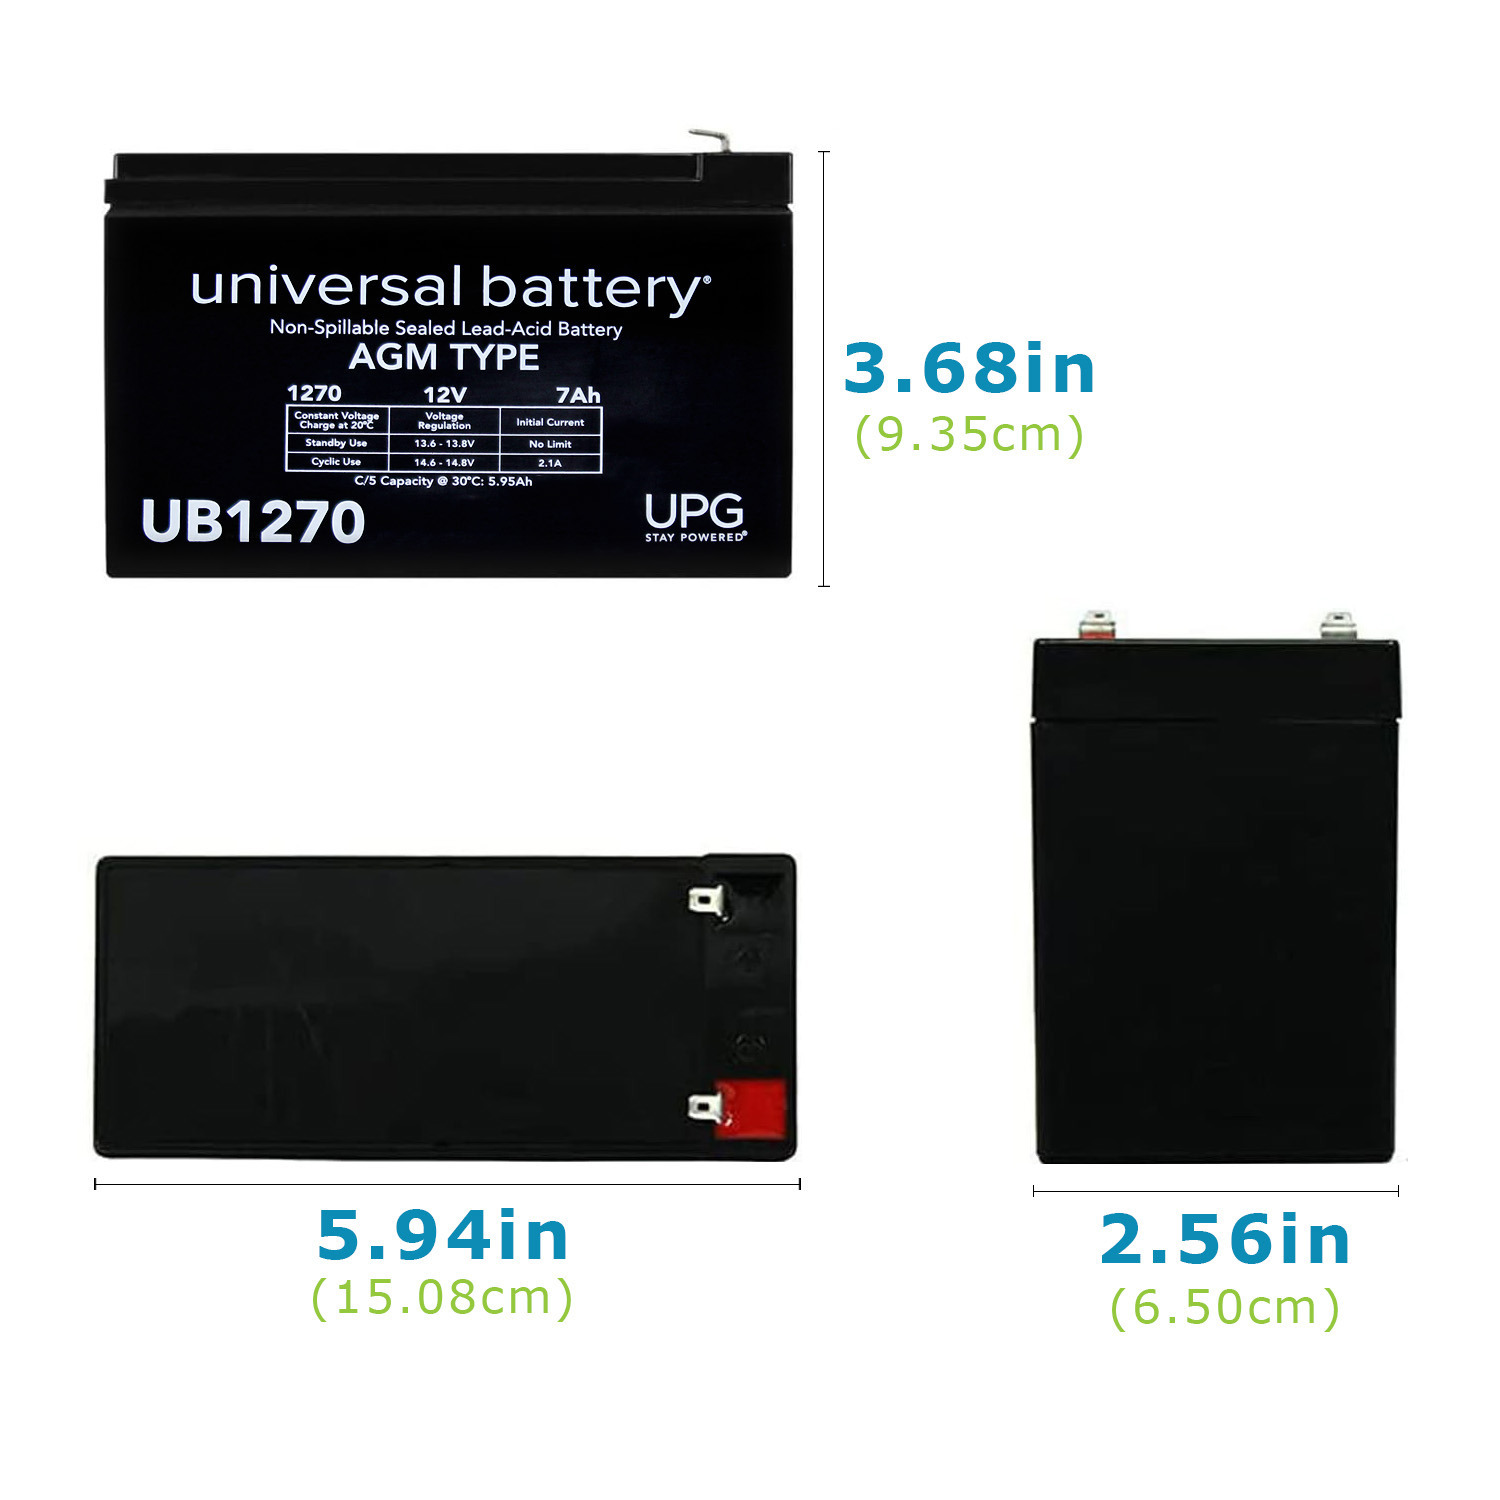 Universal Battery UB1270 Replacement Rhino Battery - image 2 of 6